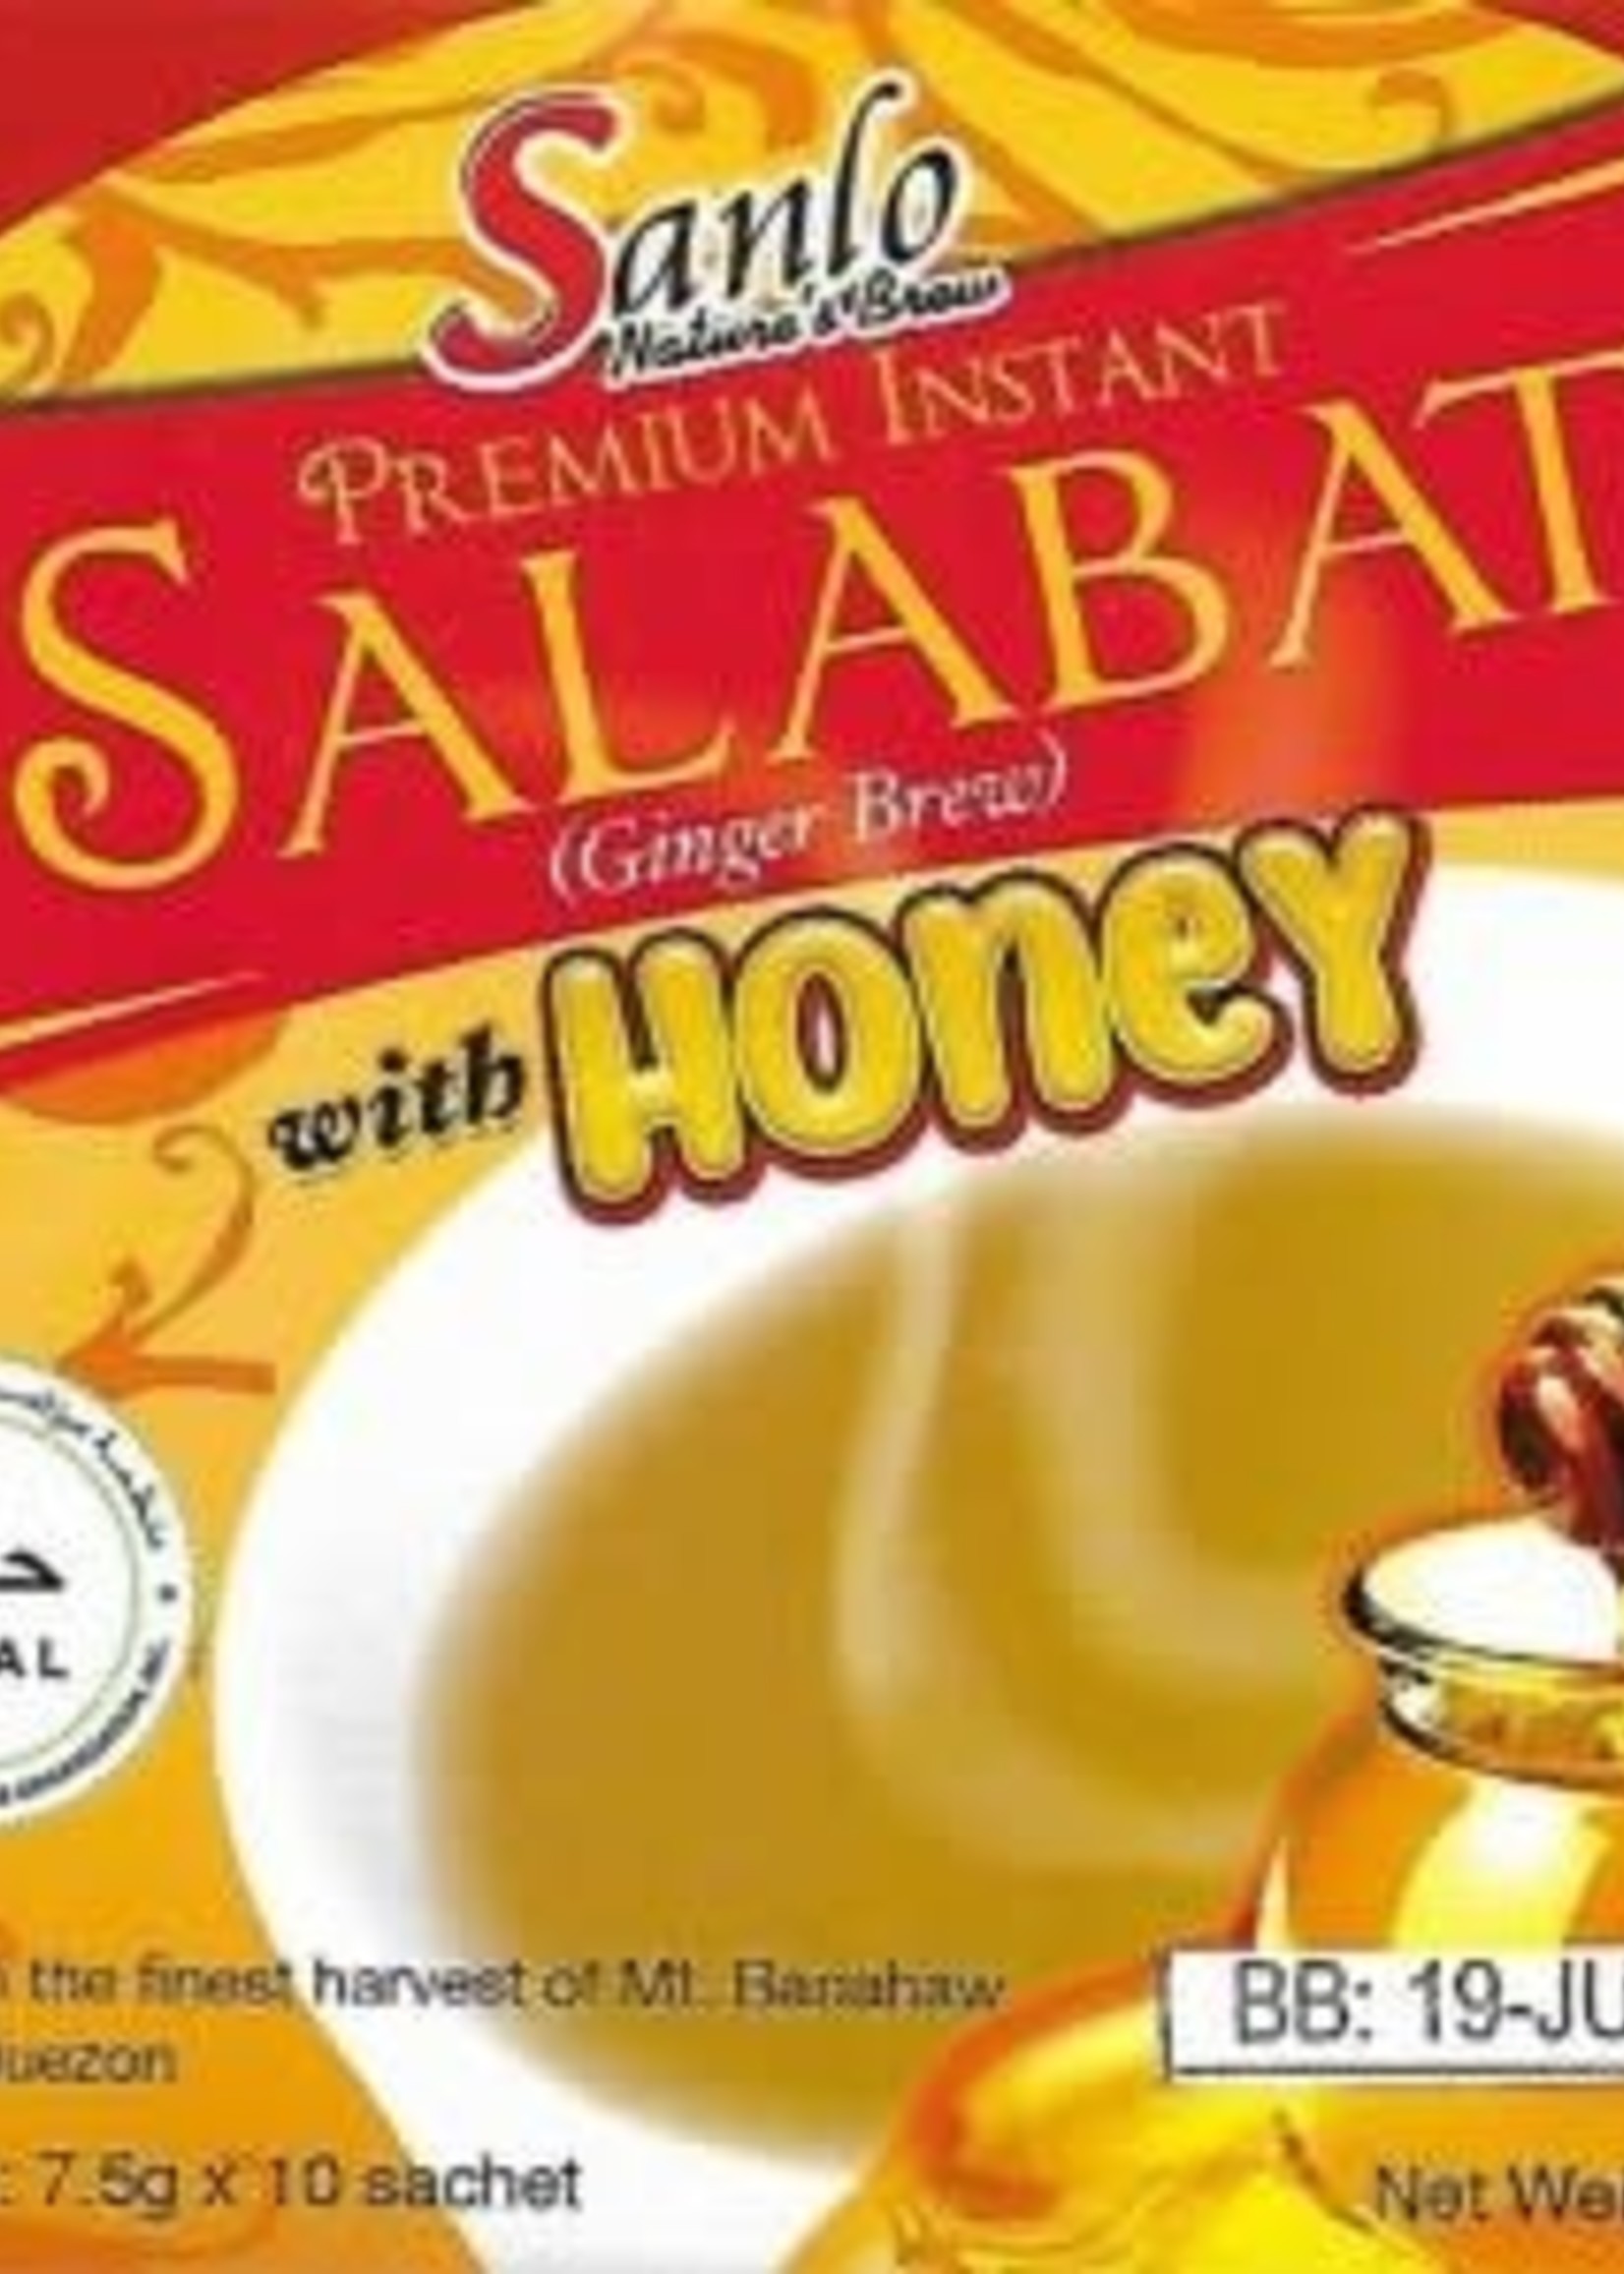 Sanlo Premium Instant Salabat met Honing 75 gr Sanlo